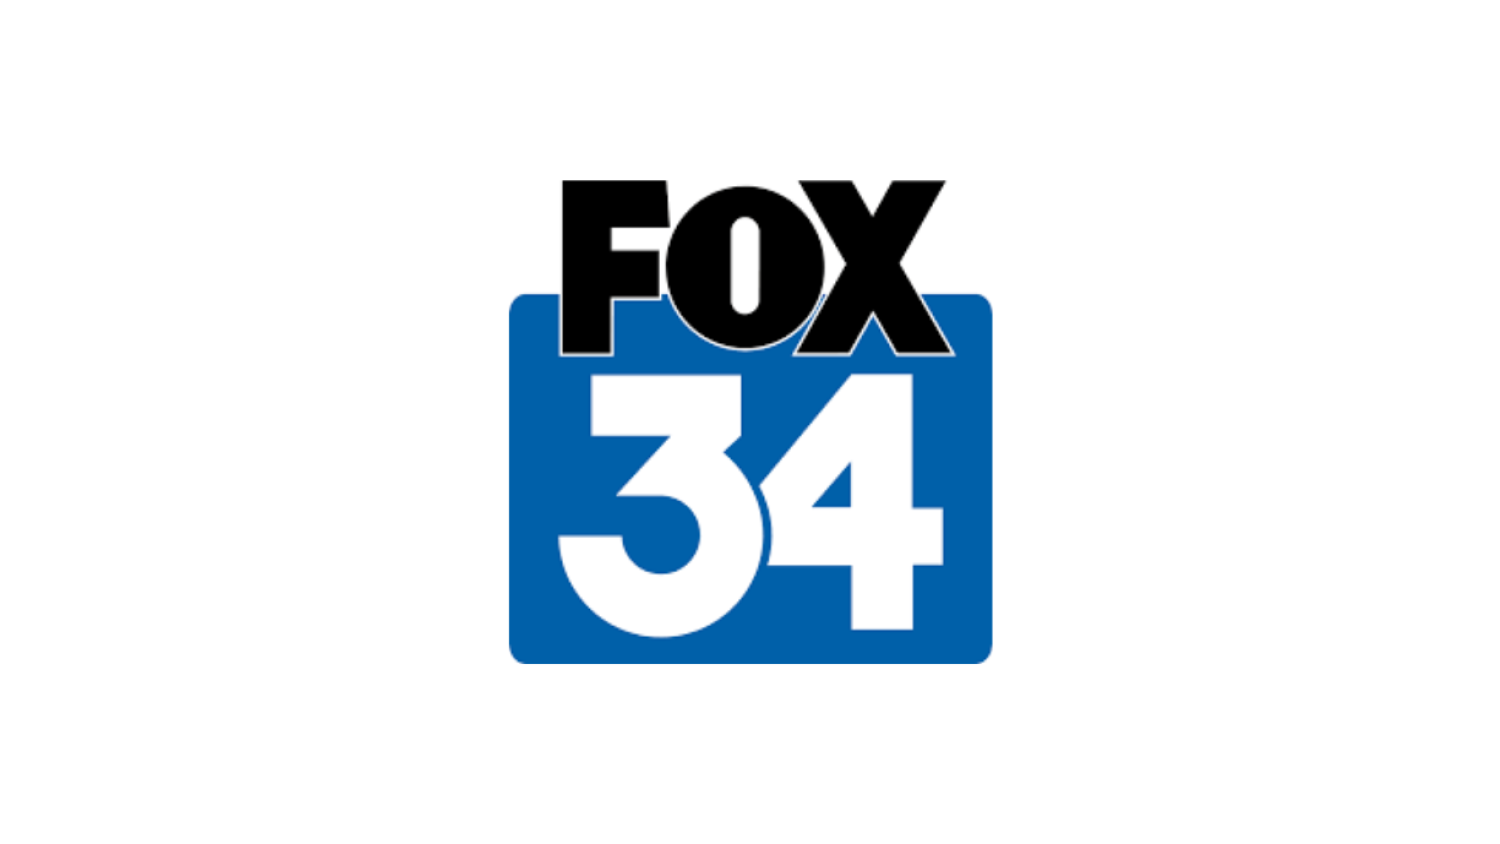 Fox 34 news station logo